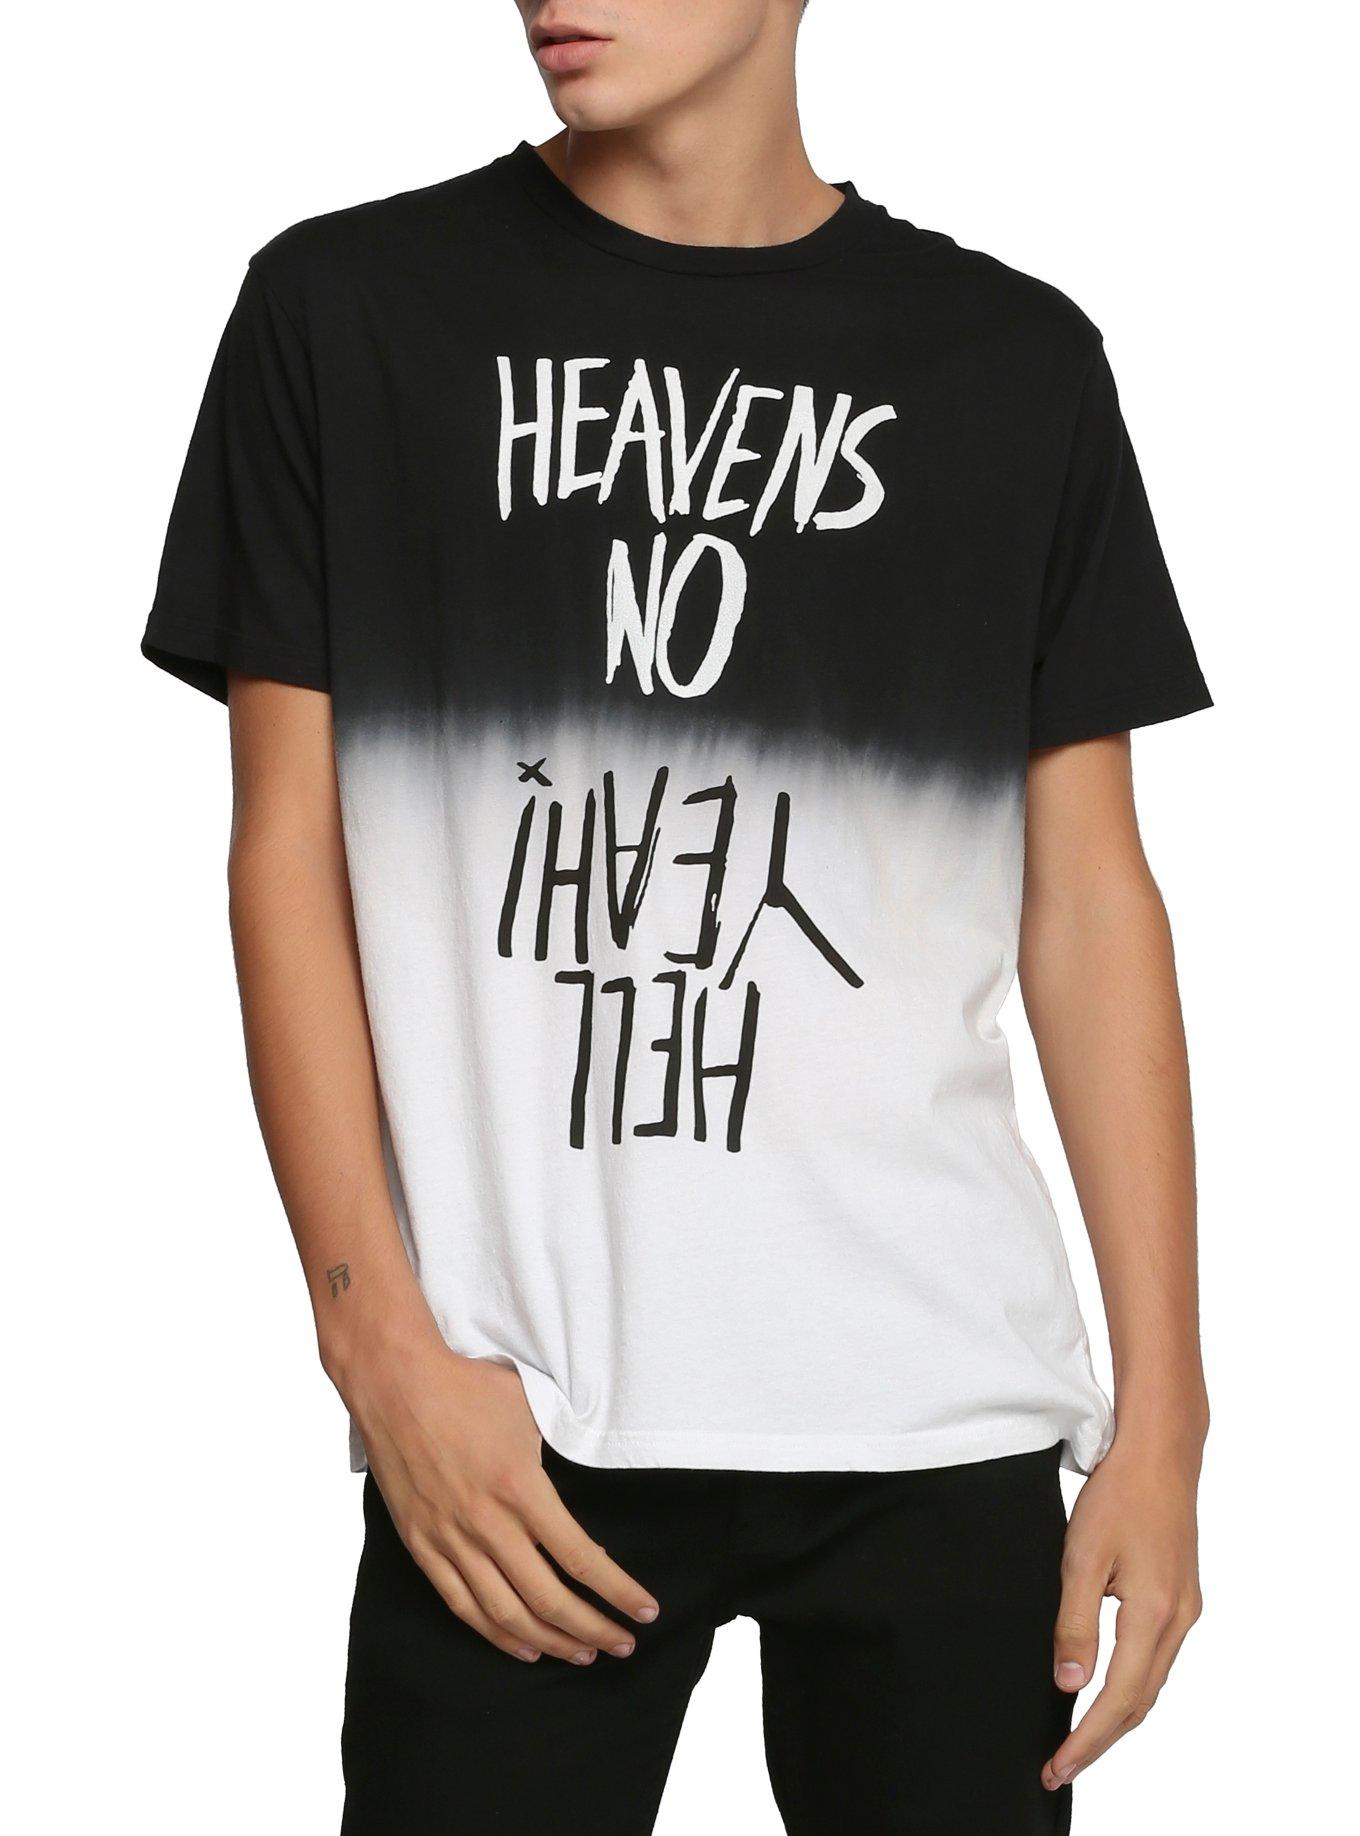 Heavens No Hell Yeah Split Dye T-Shirt, BLACK, hi-res